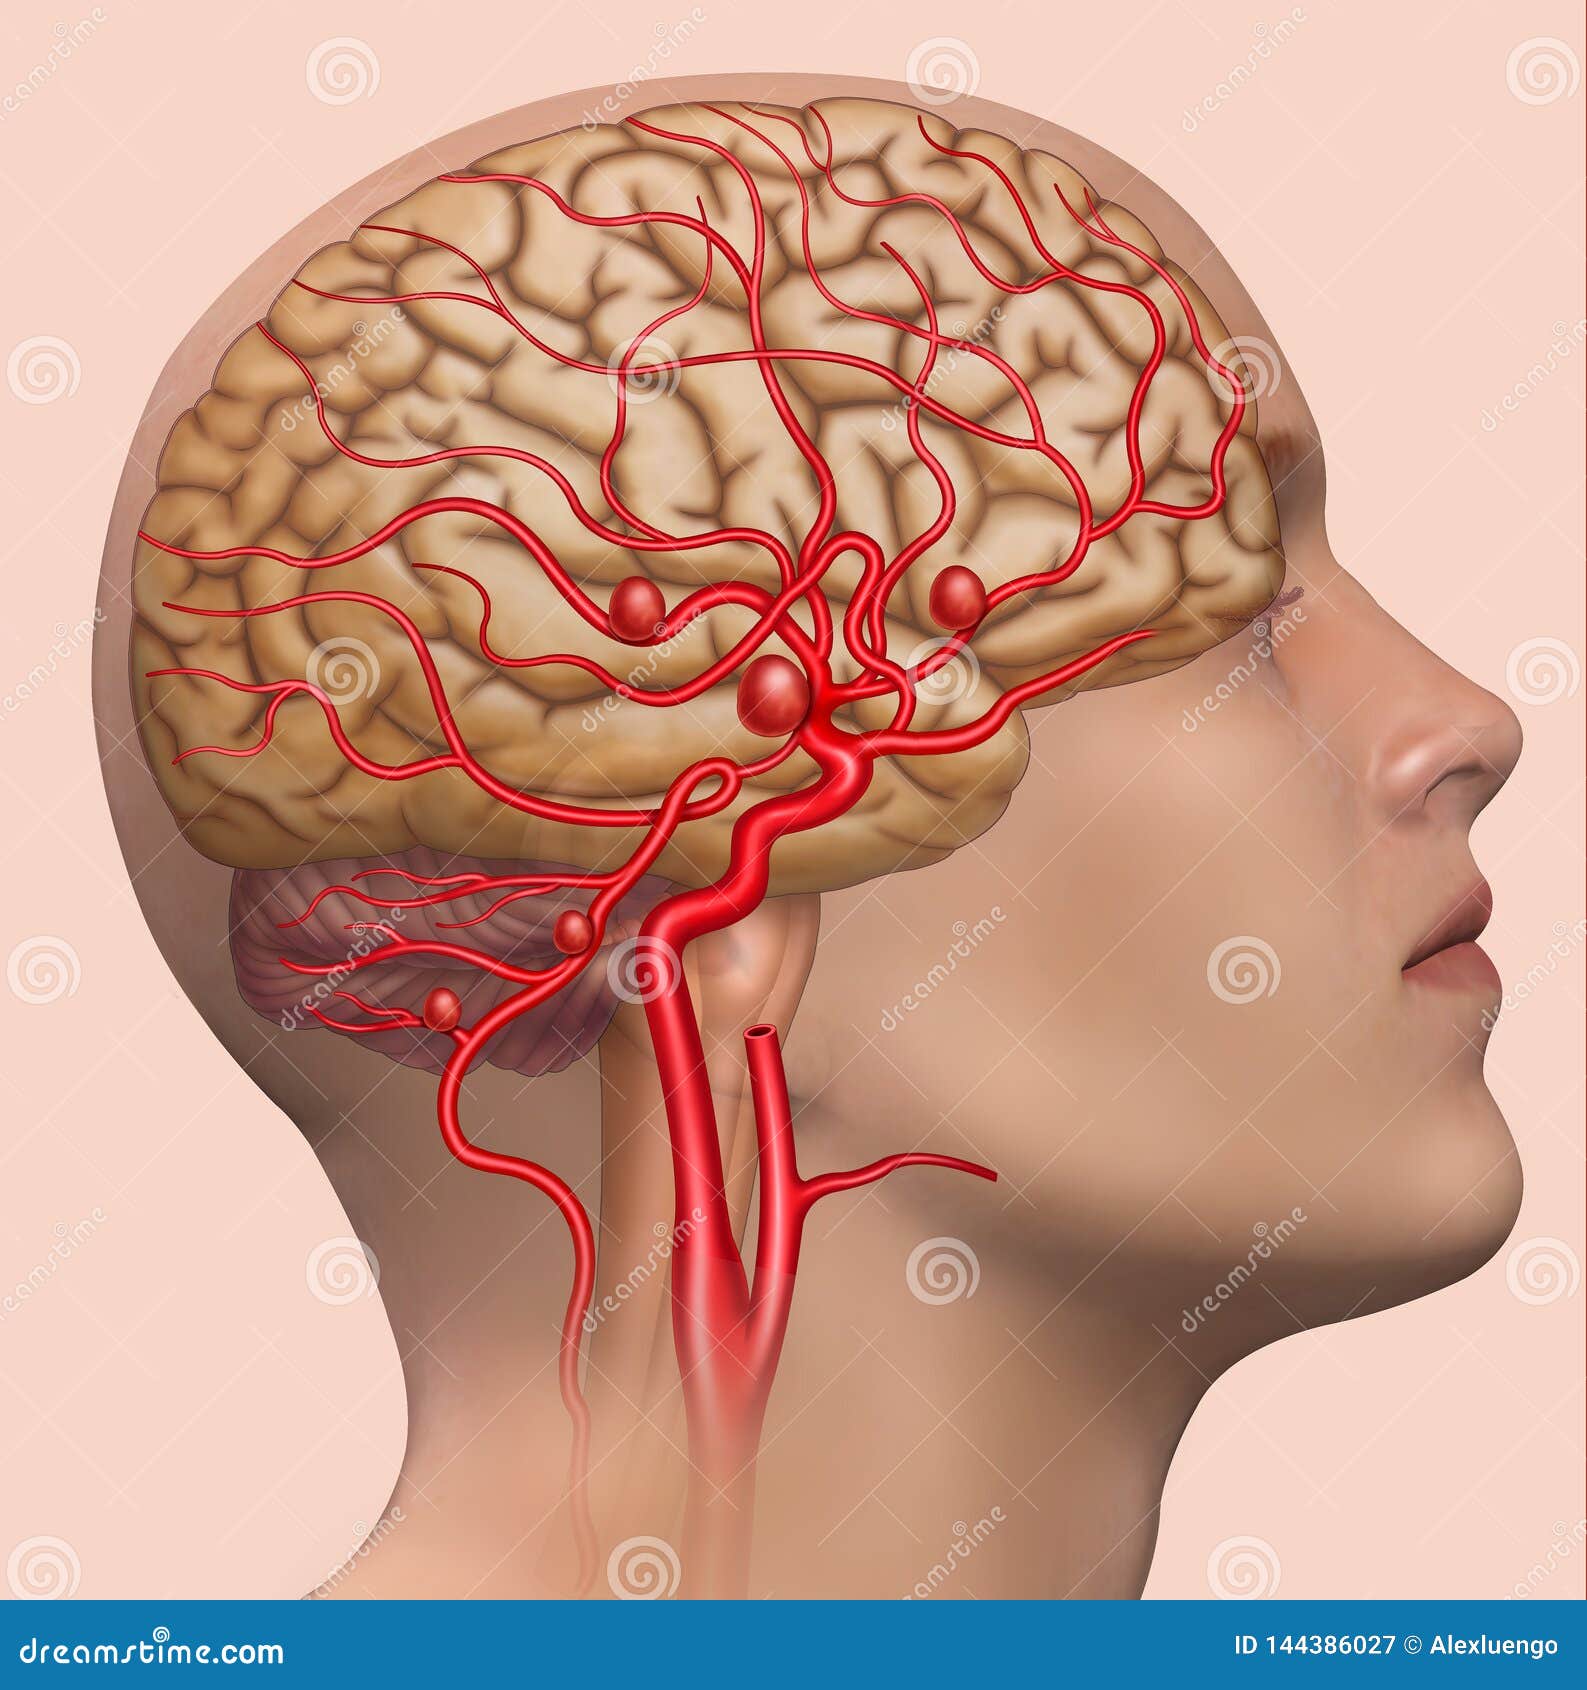 descriptive  of the development of the human cerebral aneurysm.